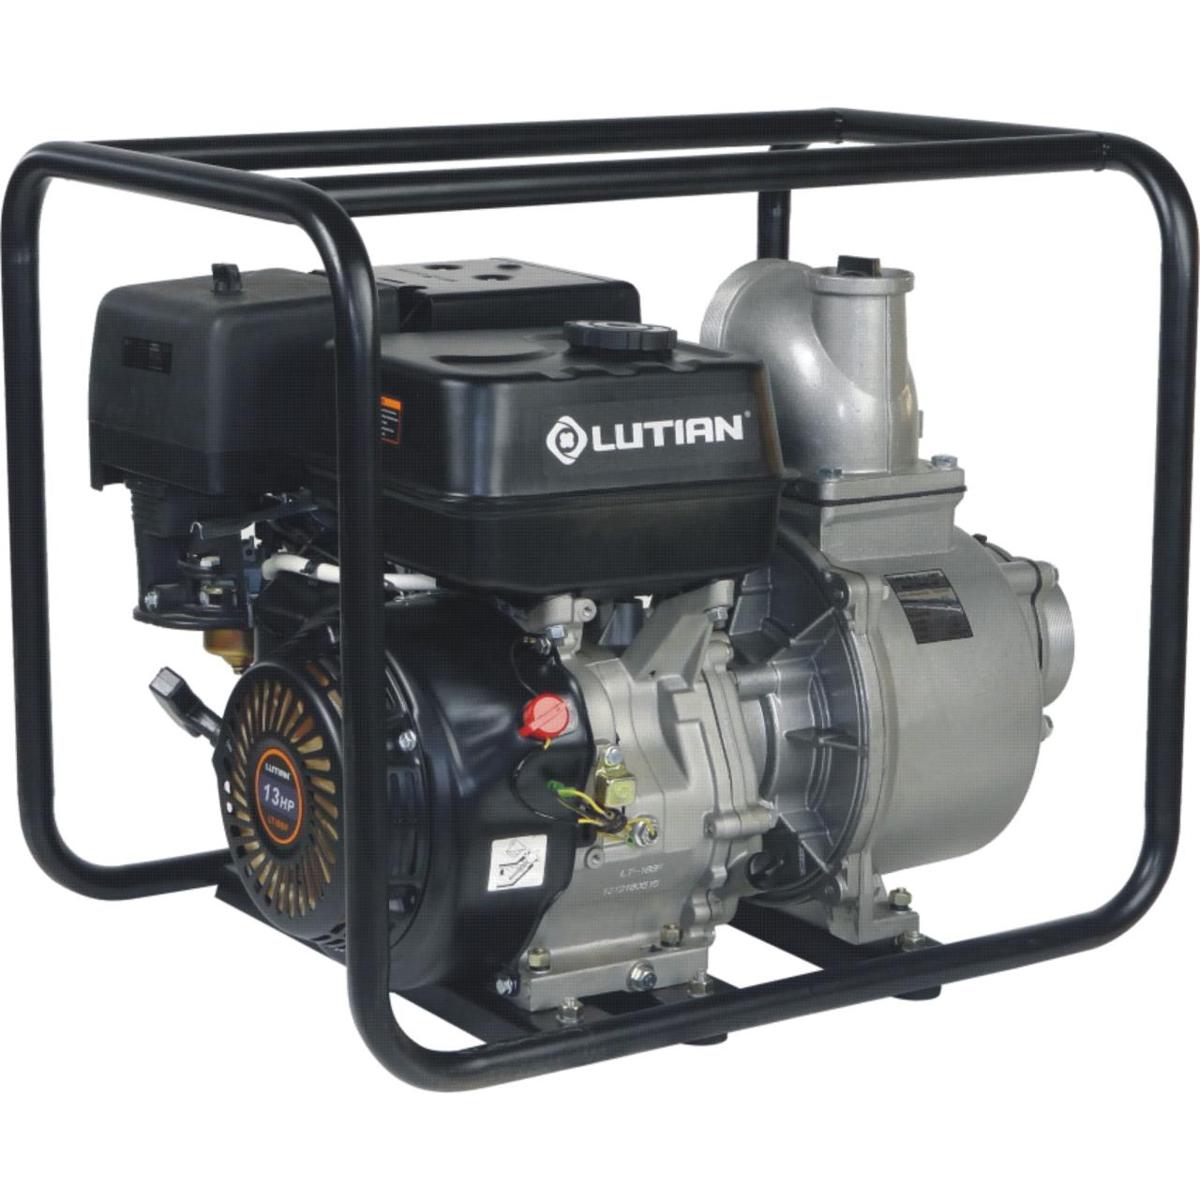 LUTIAN - LT40CX - Water Pump 4 inch (4x4) - Petrol Engine Driven - DeWatering Engine Pump Portable